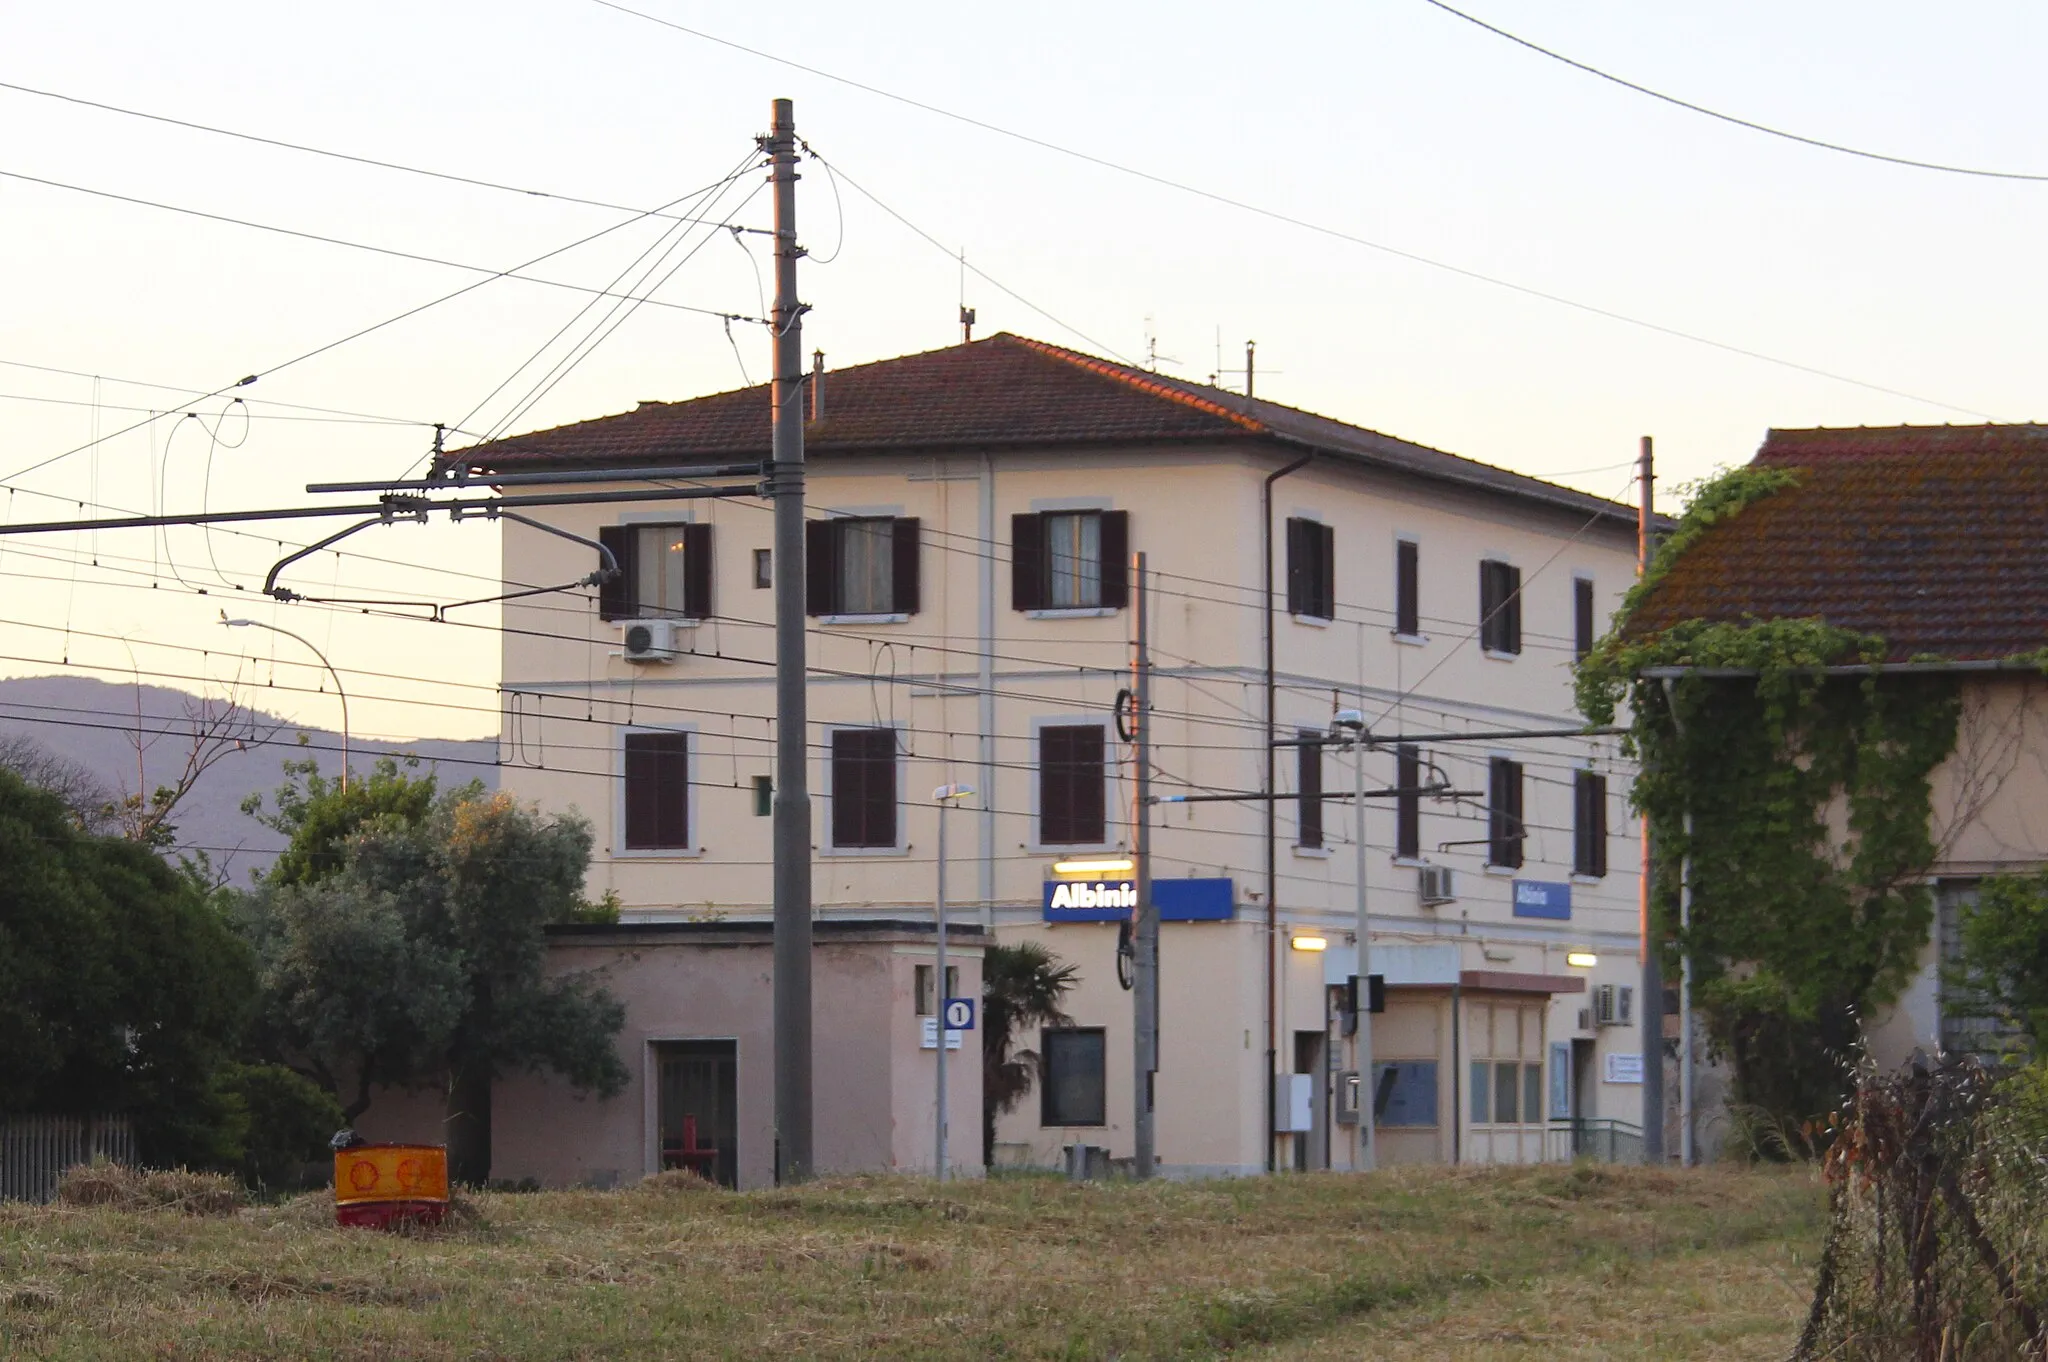 Photo showing: Albinia train station, Albinia, hamlet of Orbetello, Province of Grosseto, Tuscany, Italy